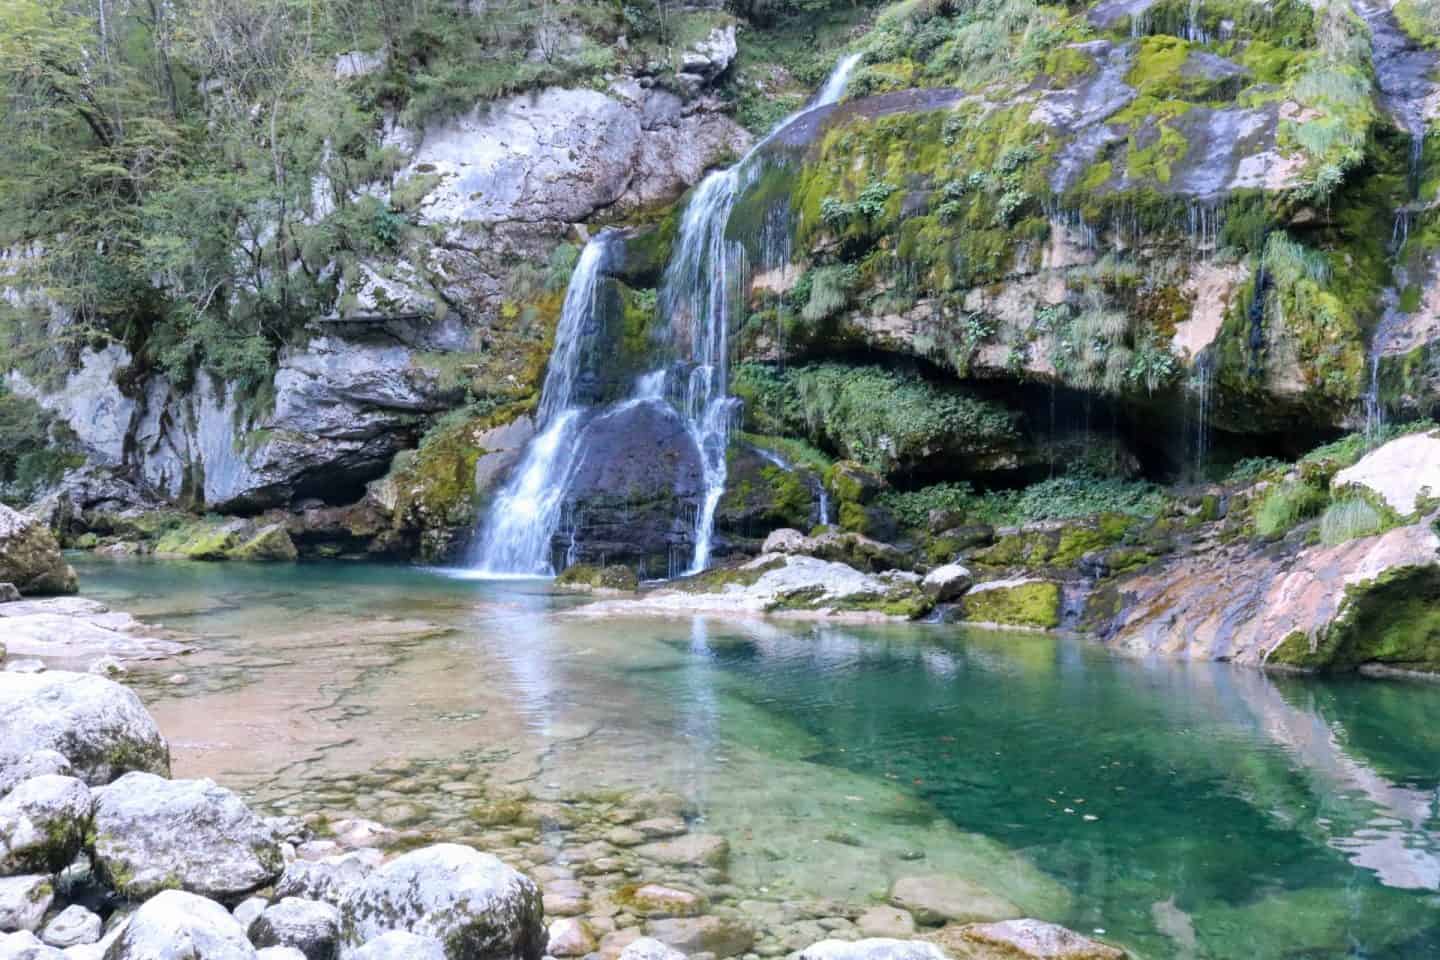 Virje waterfall most beautiful waterfall in slovenia